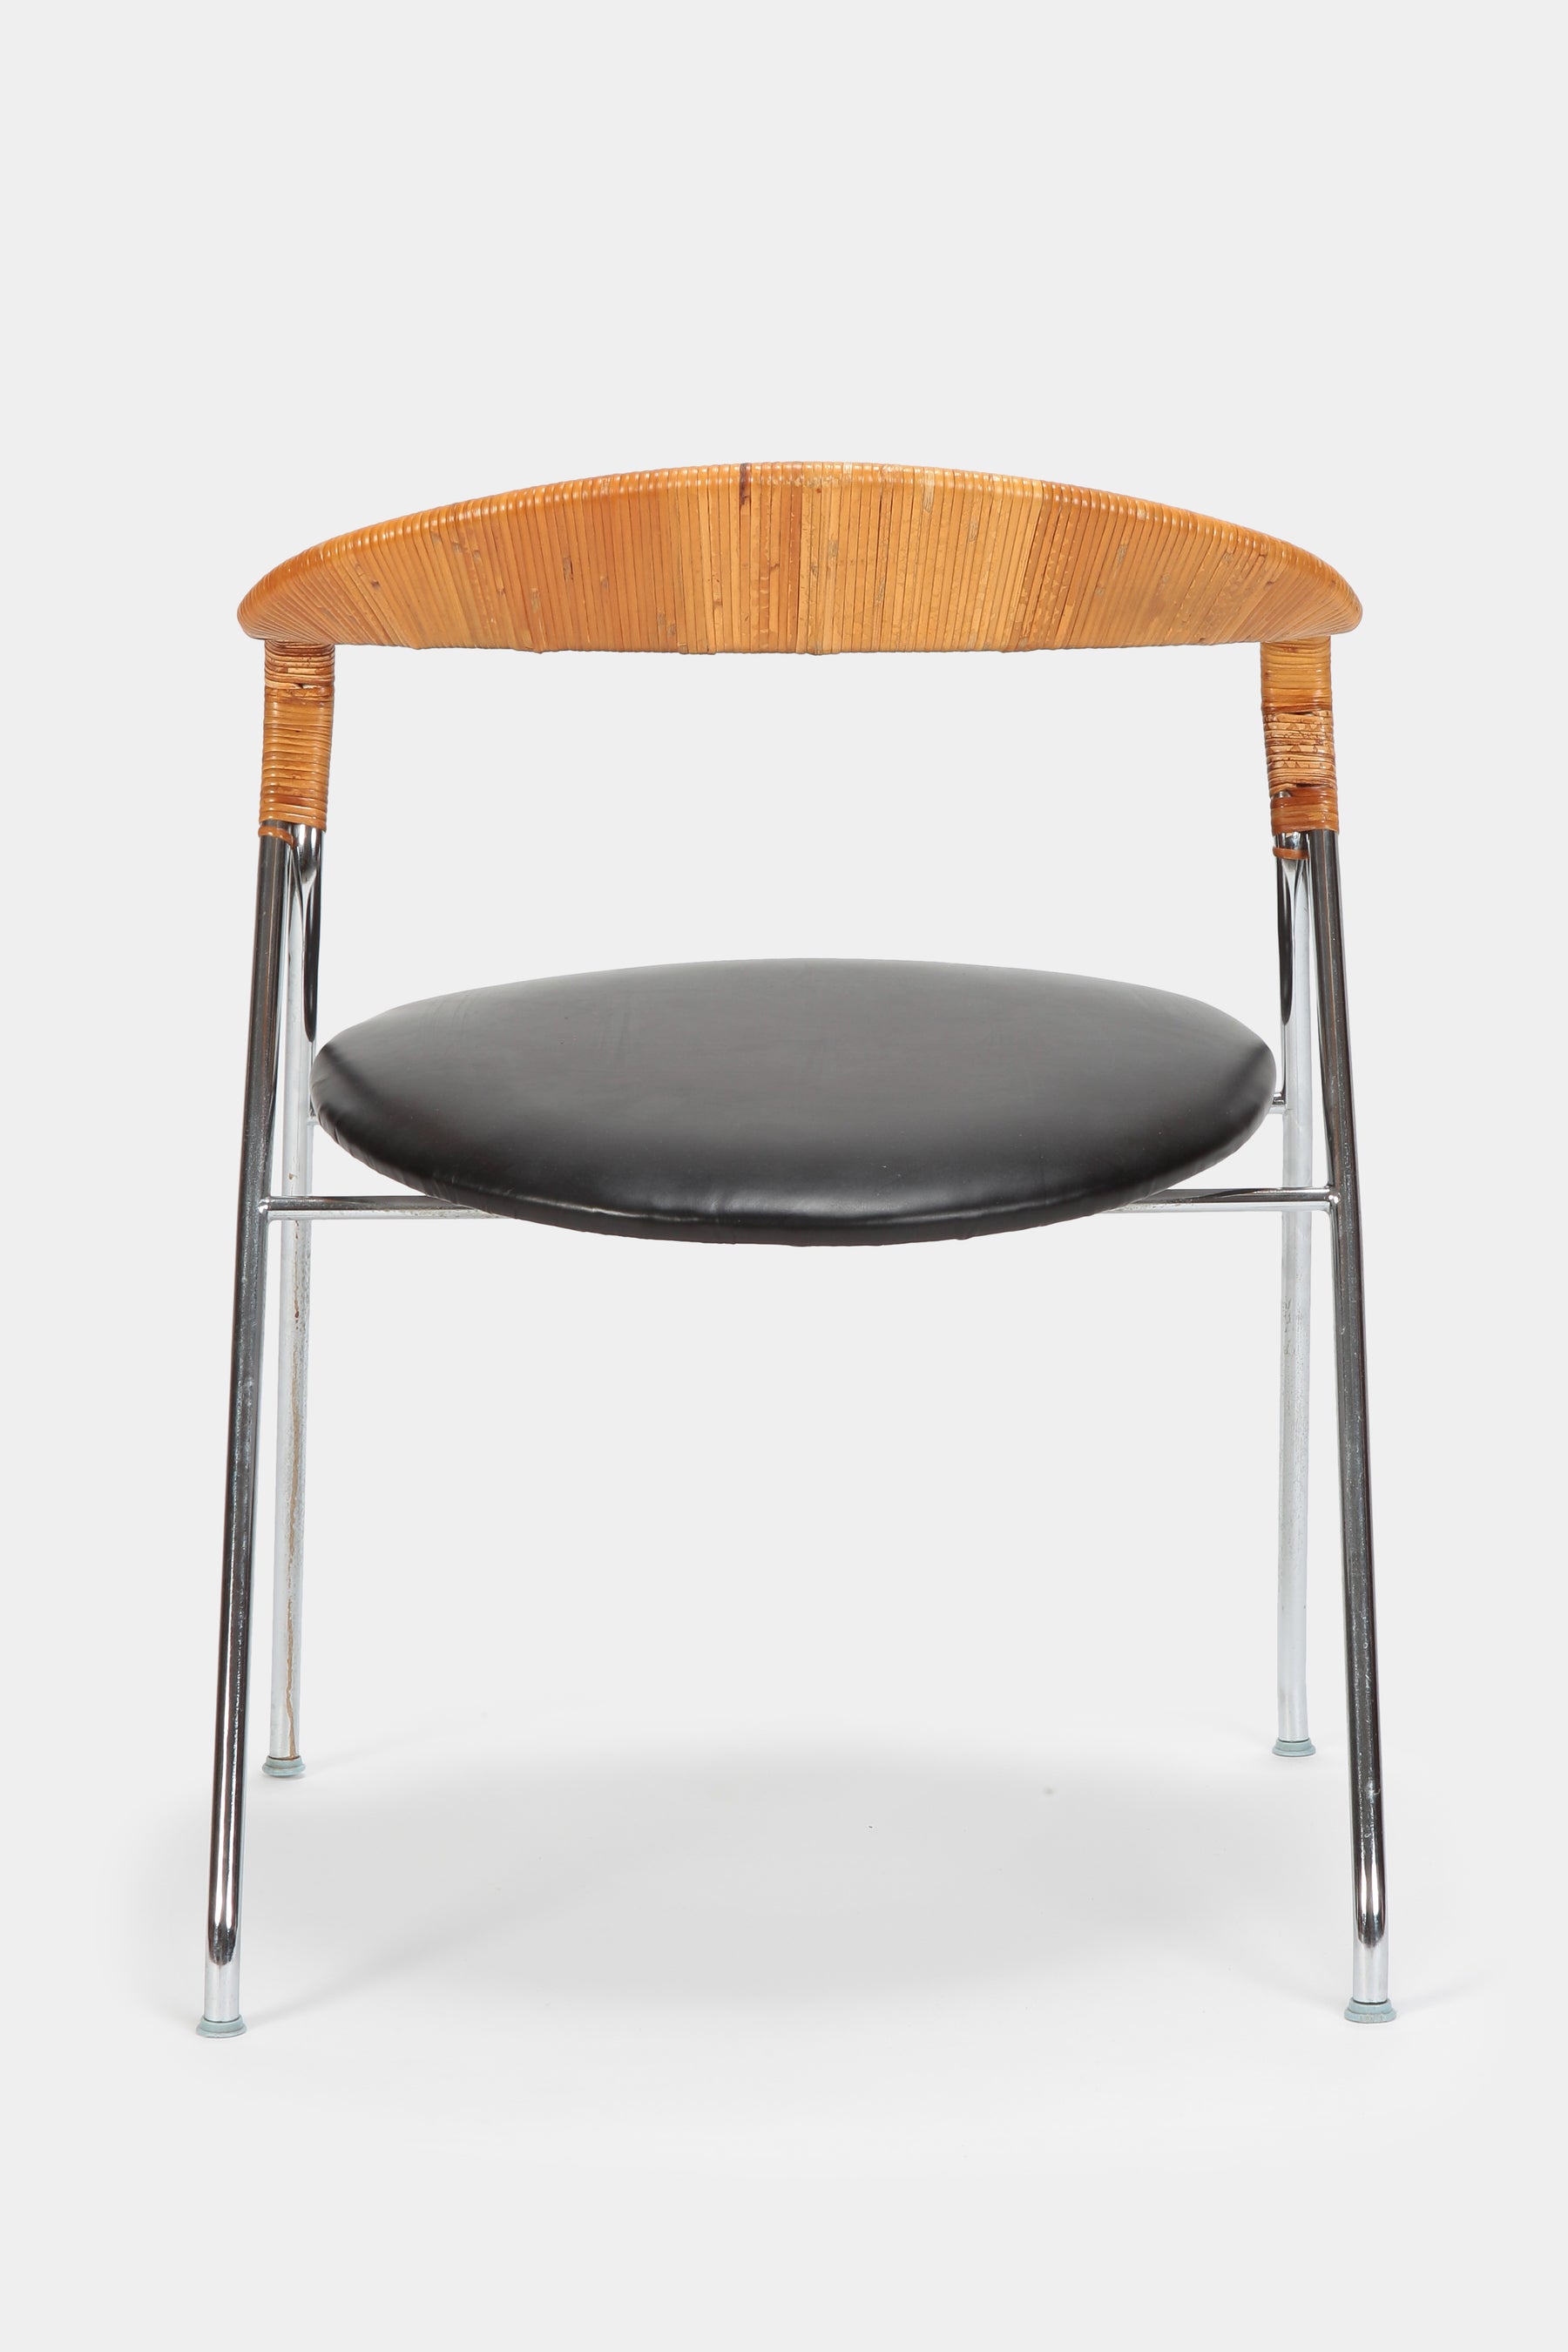 Hans Eichenberger "Saffa" HE103 Chair, Dietiker & Co. AG, 50s